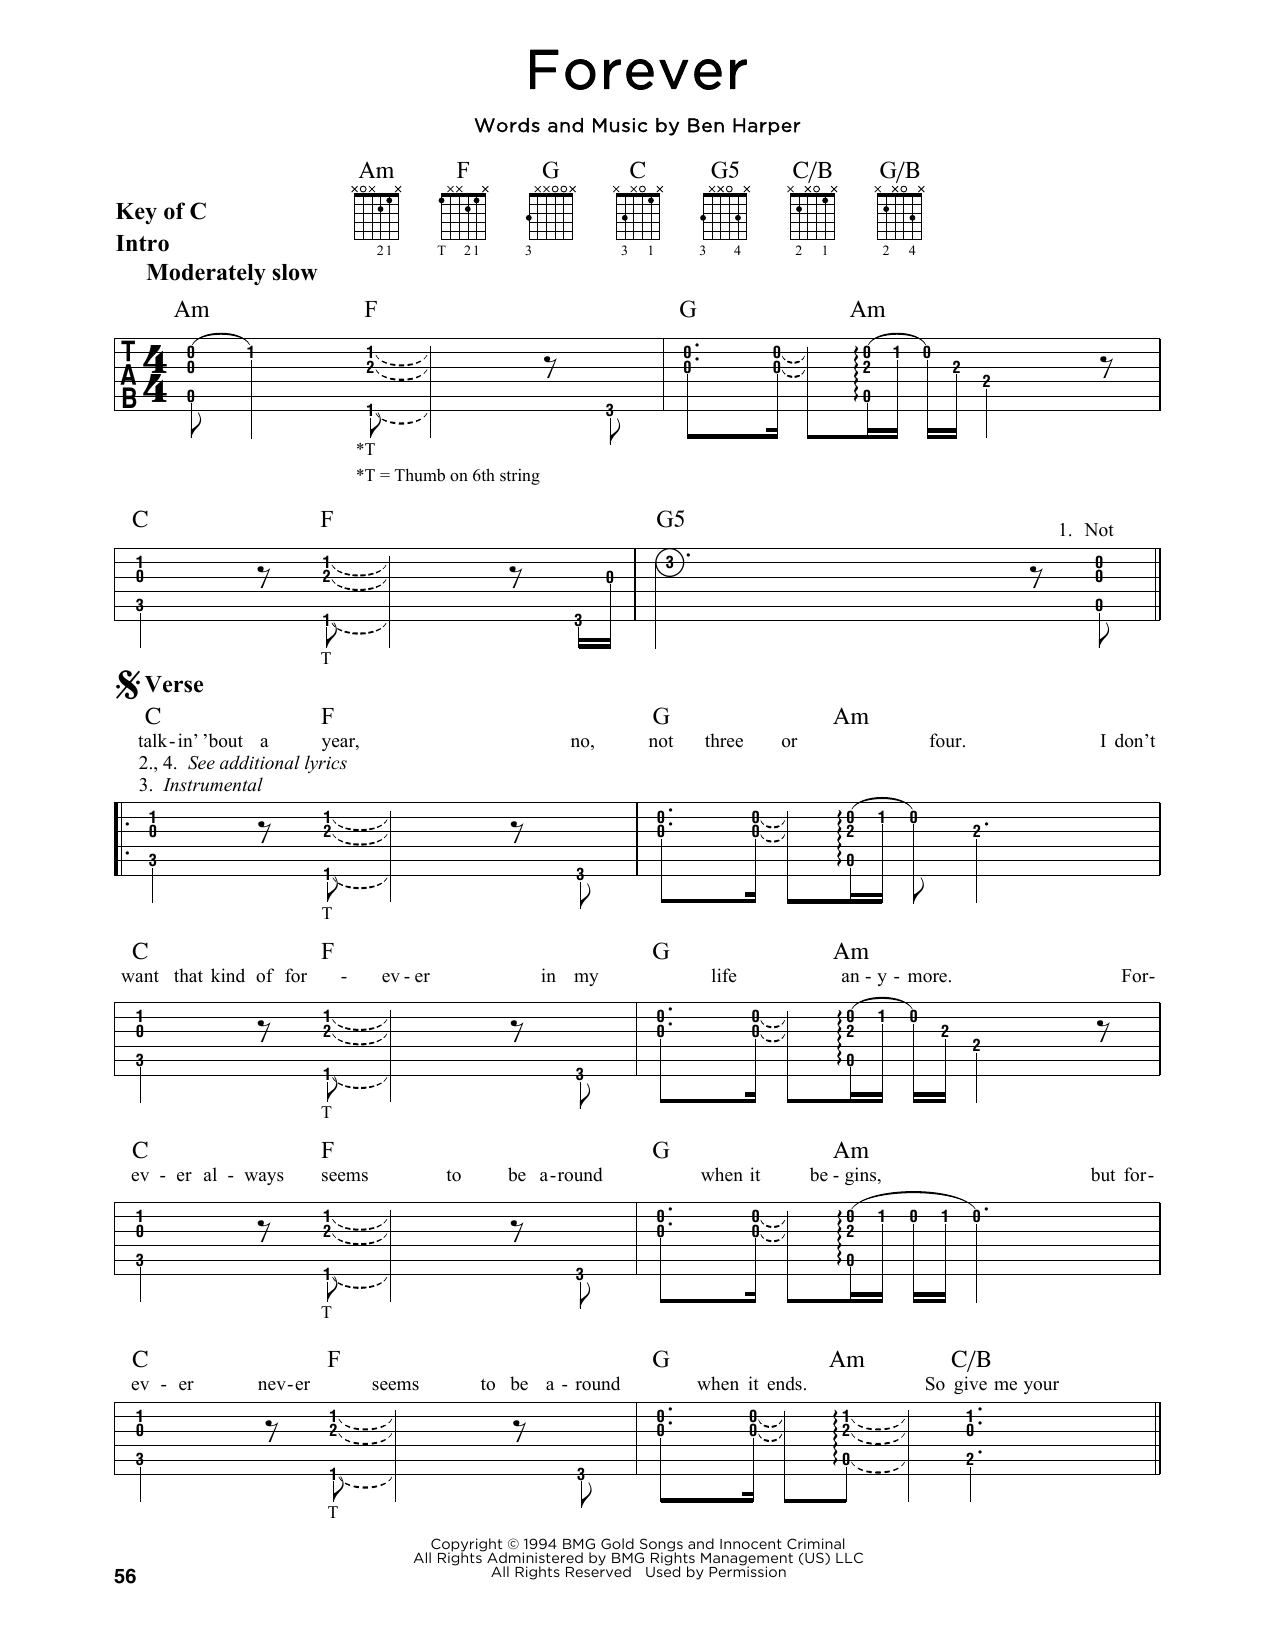 Ben Harper Forever Sheet Music Notes & Chords for Guitar Lead Sheet - Download or Print PDF